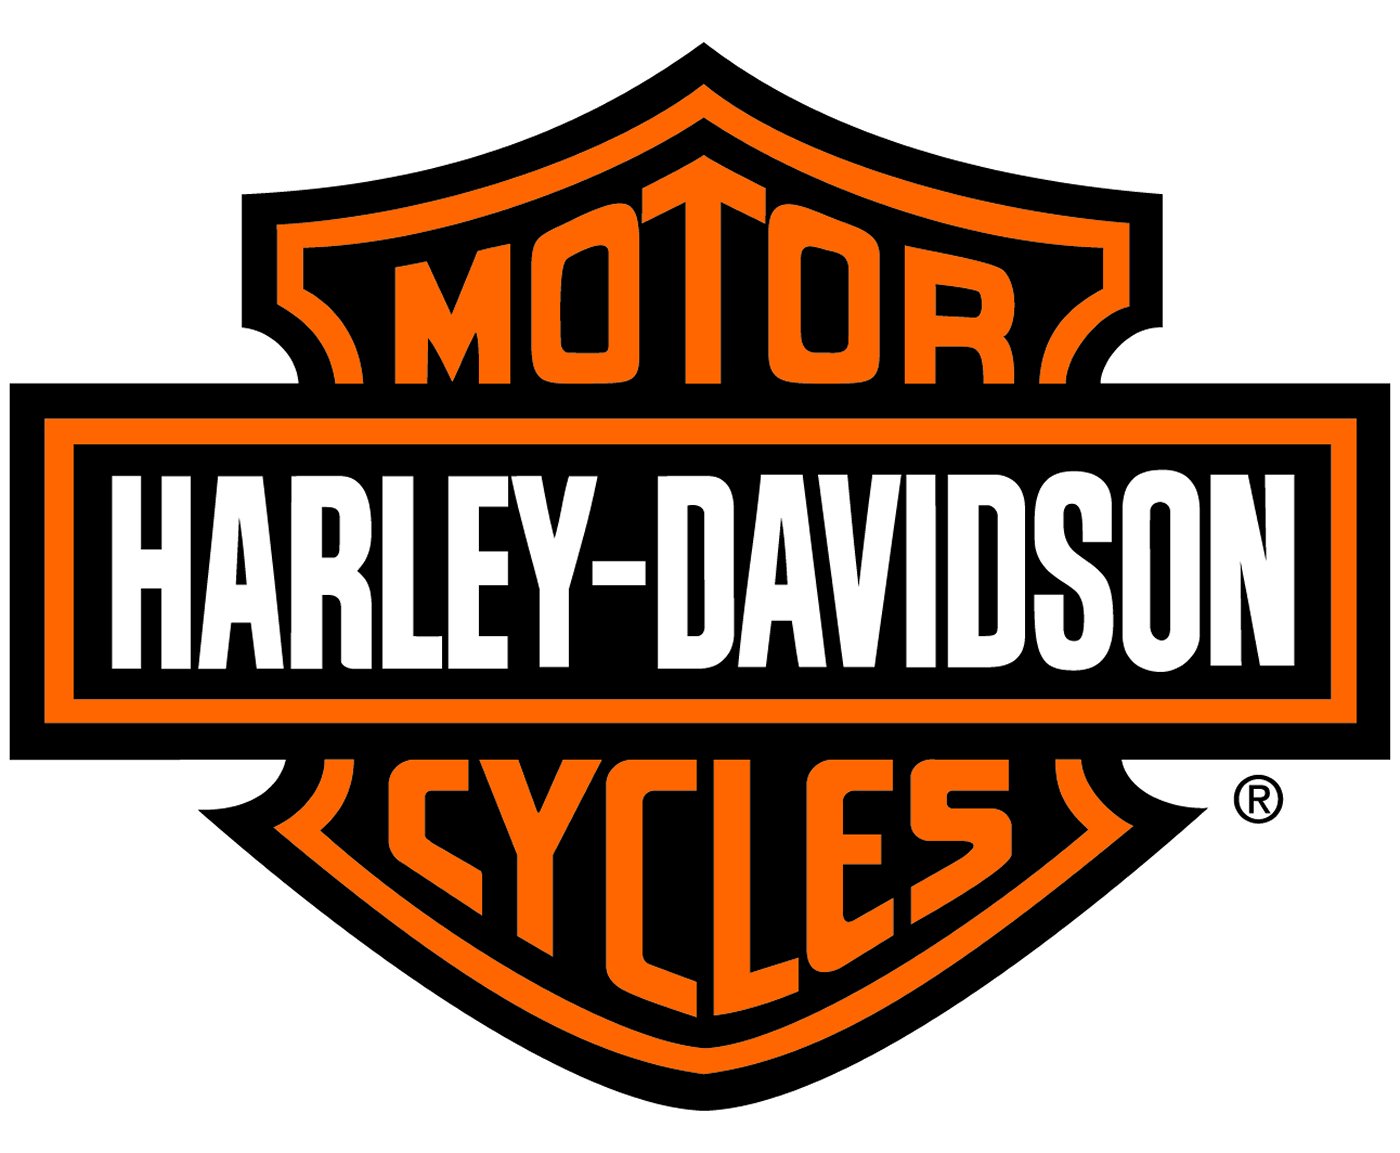 Pit Bull - Harley Davidson Motorcycles